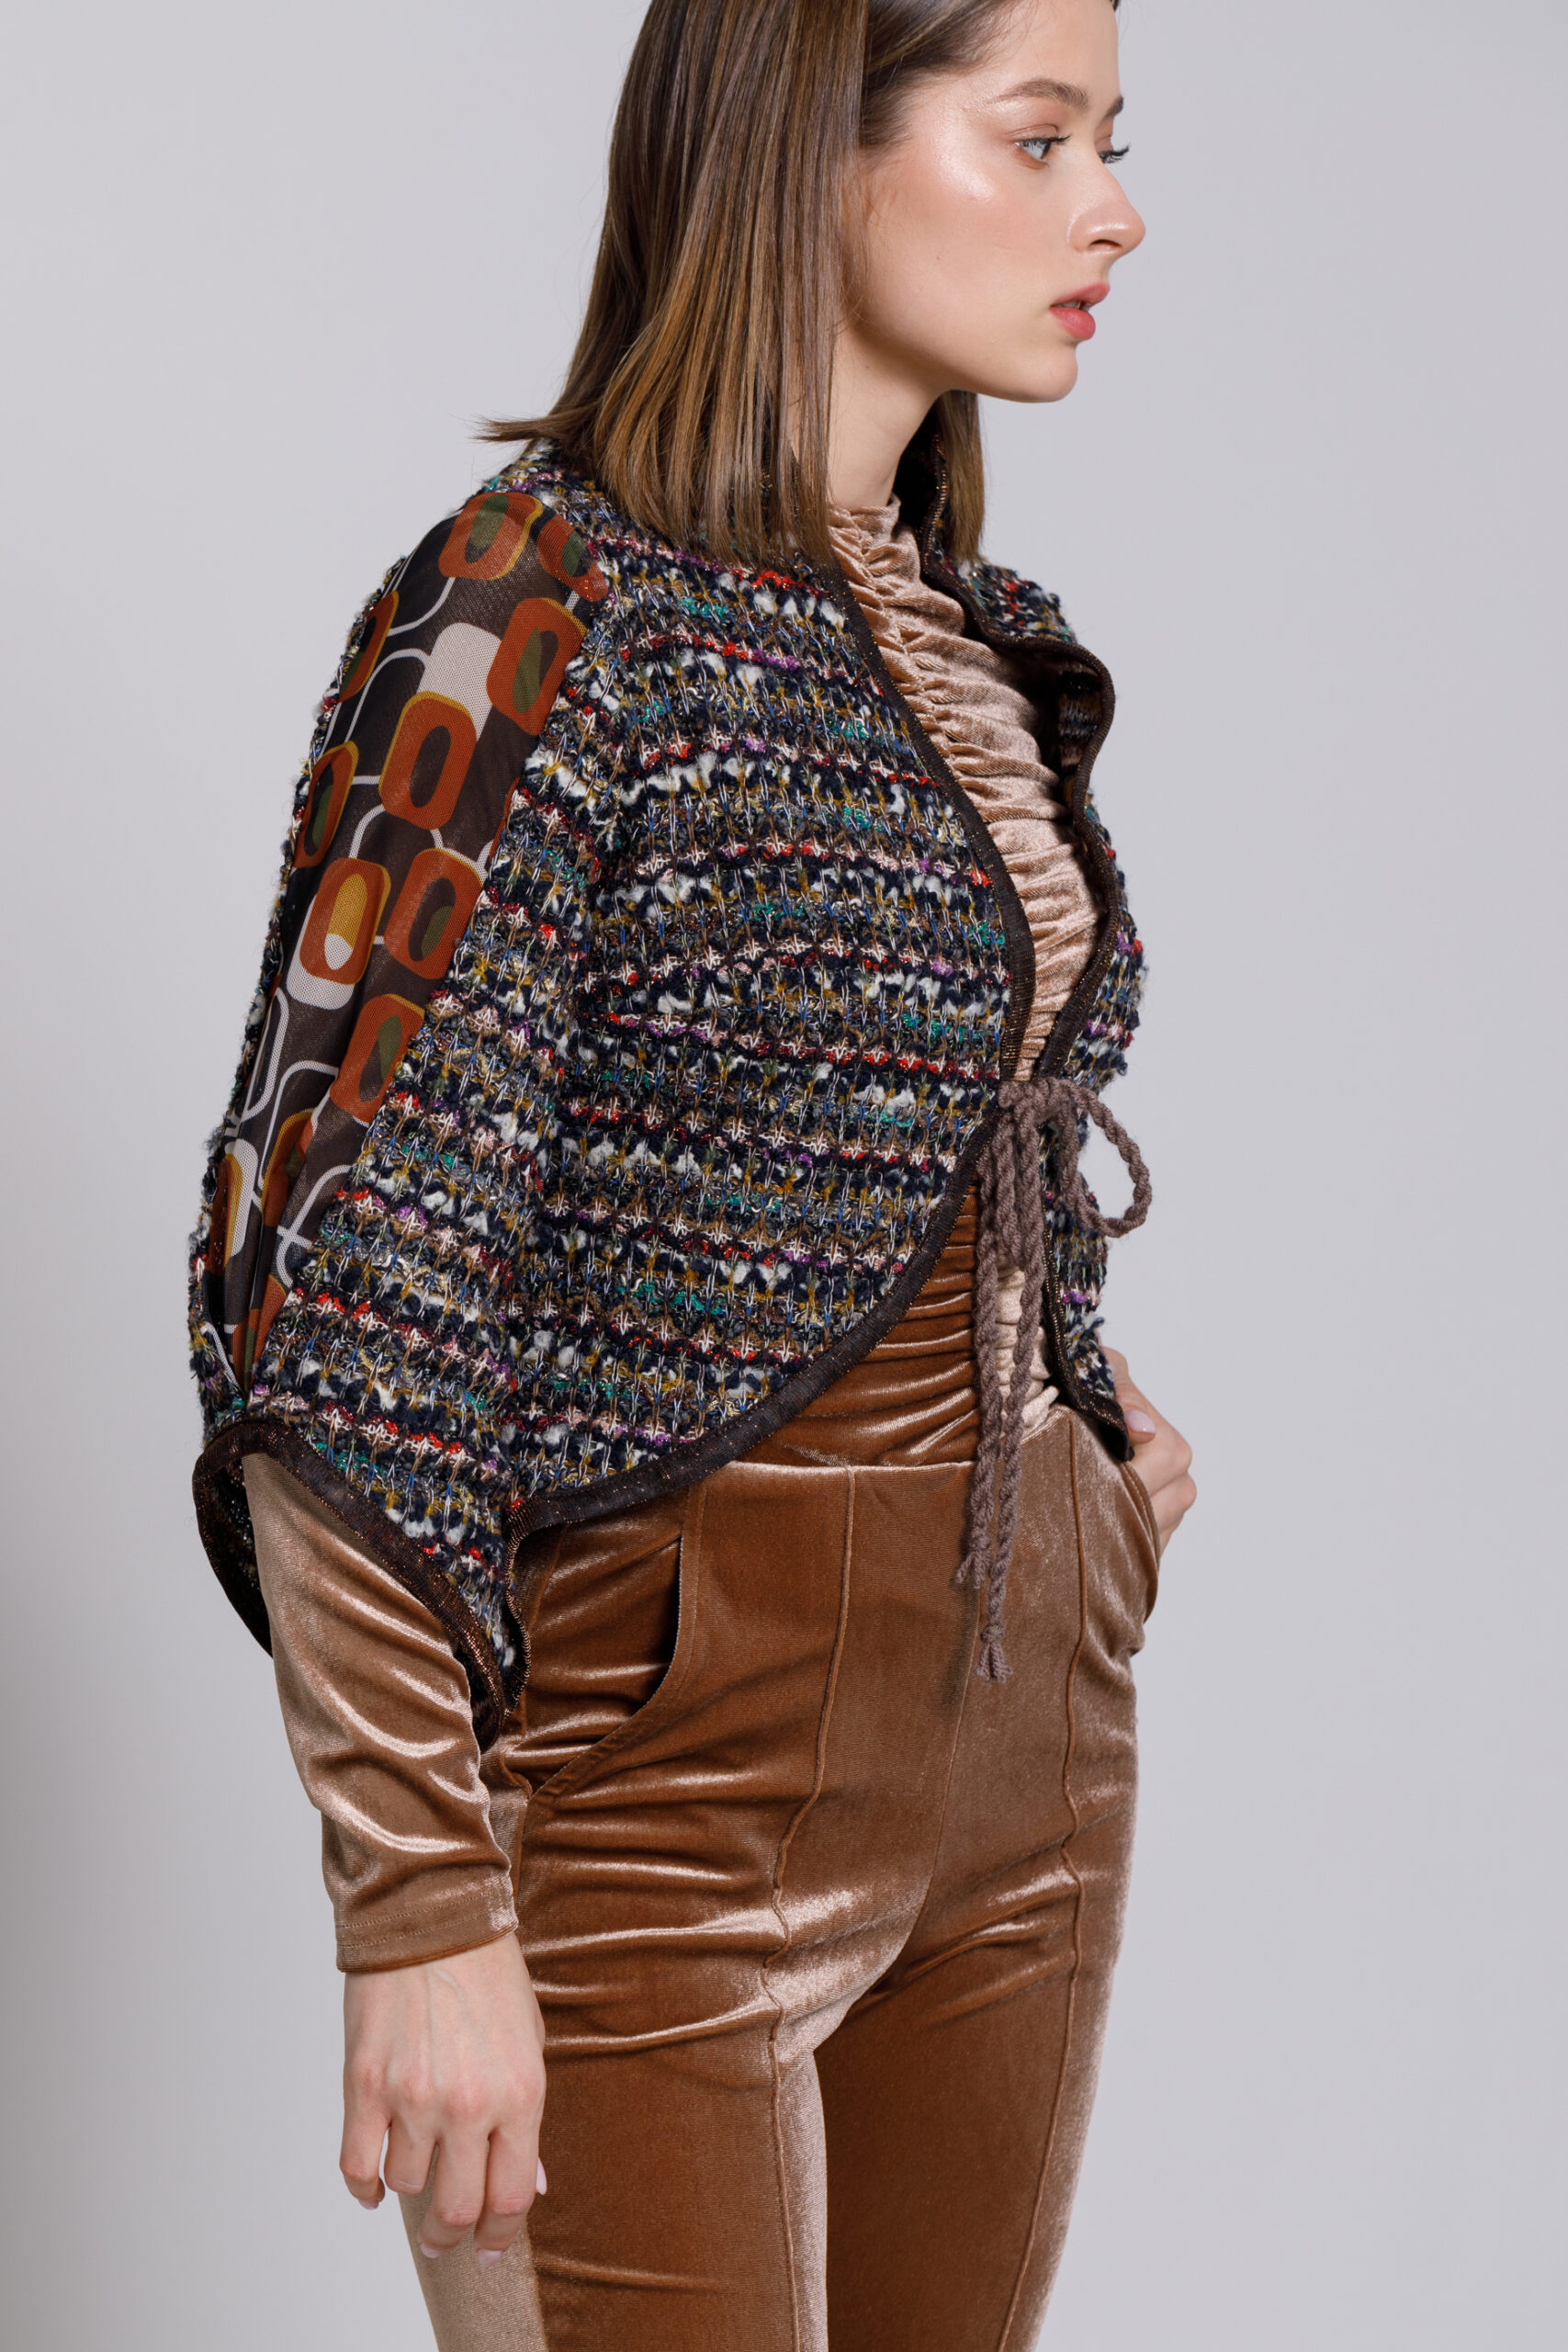 Jacheta OSIRIS aramiu cu motive geometrice tricot multicolor. Materiale naturale, design unicat, cu broderie si aplicatii handmade